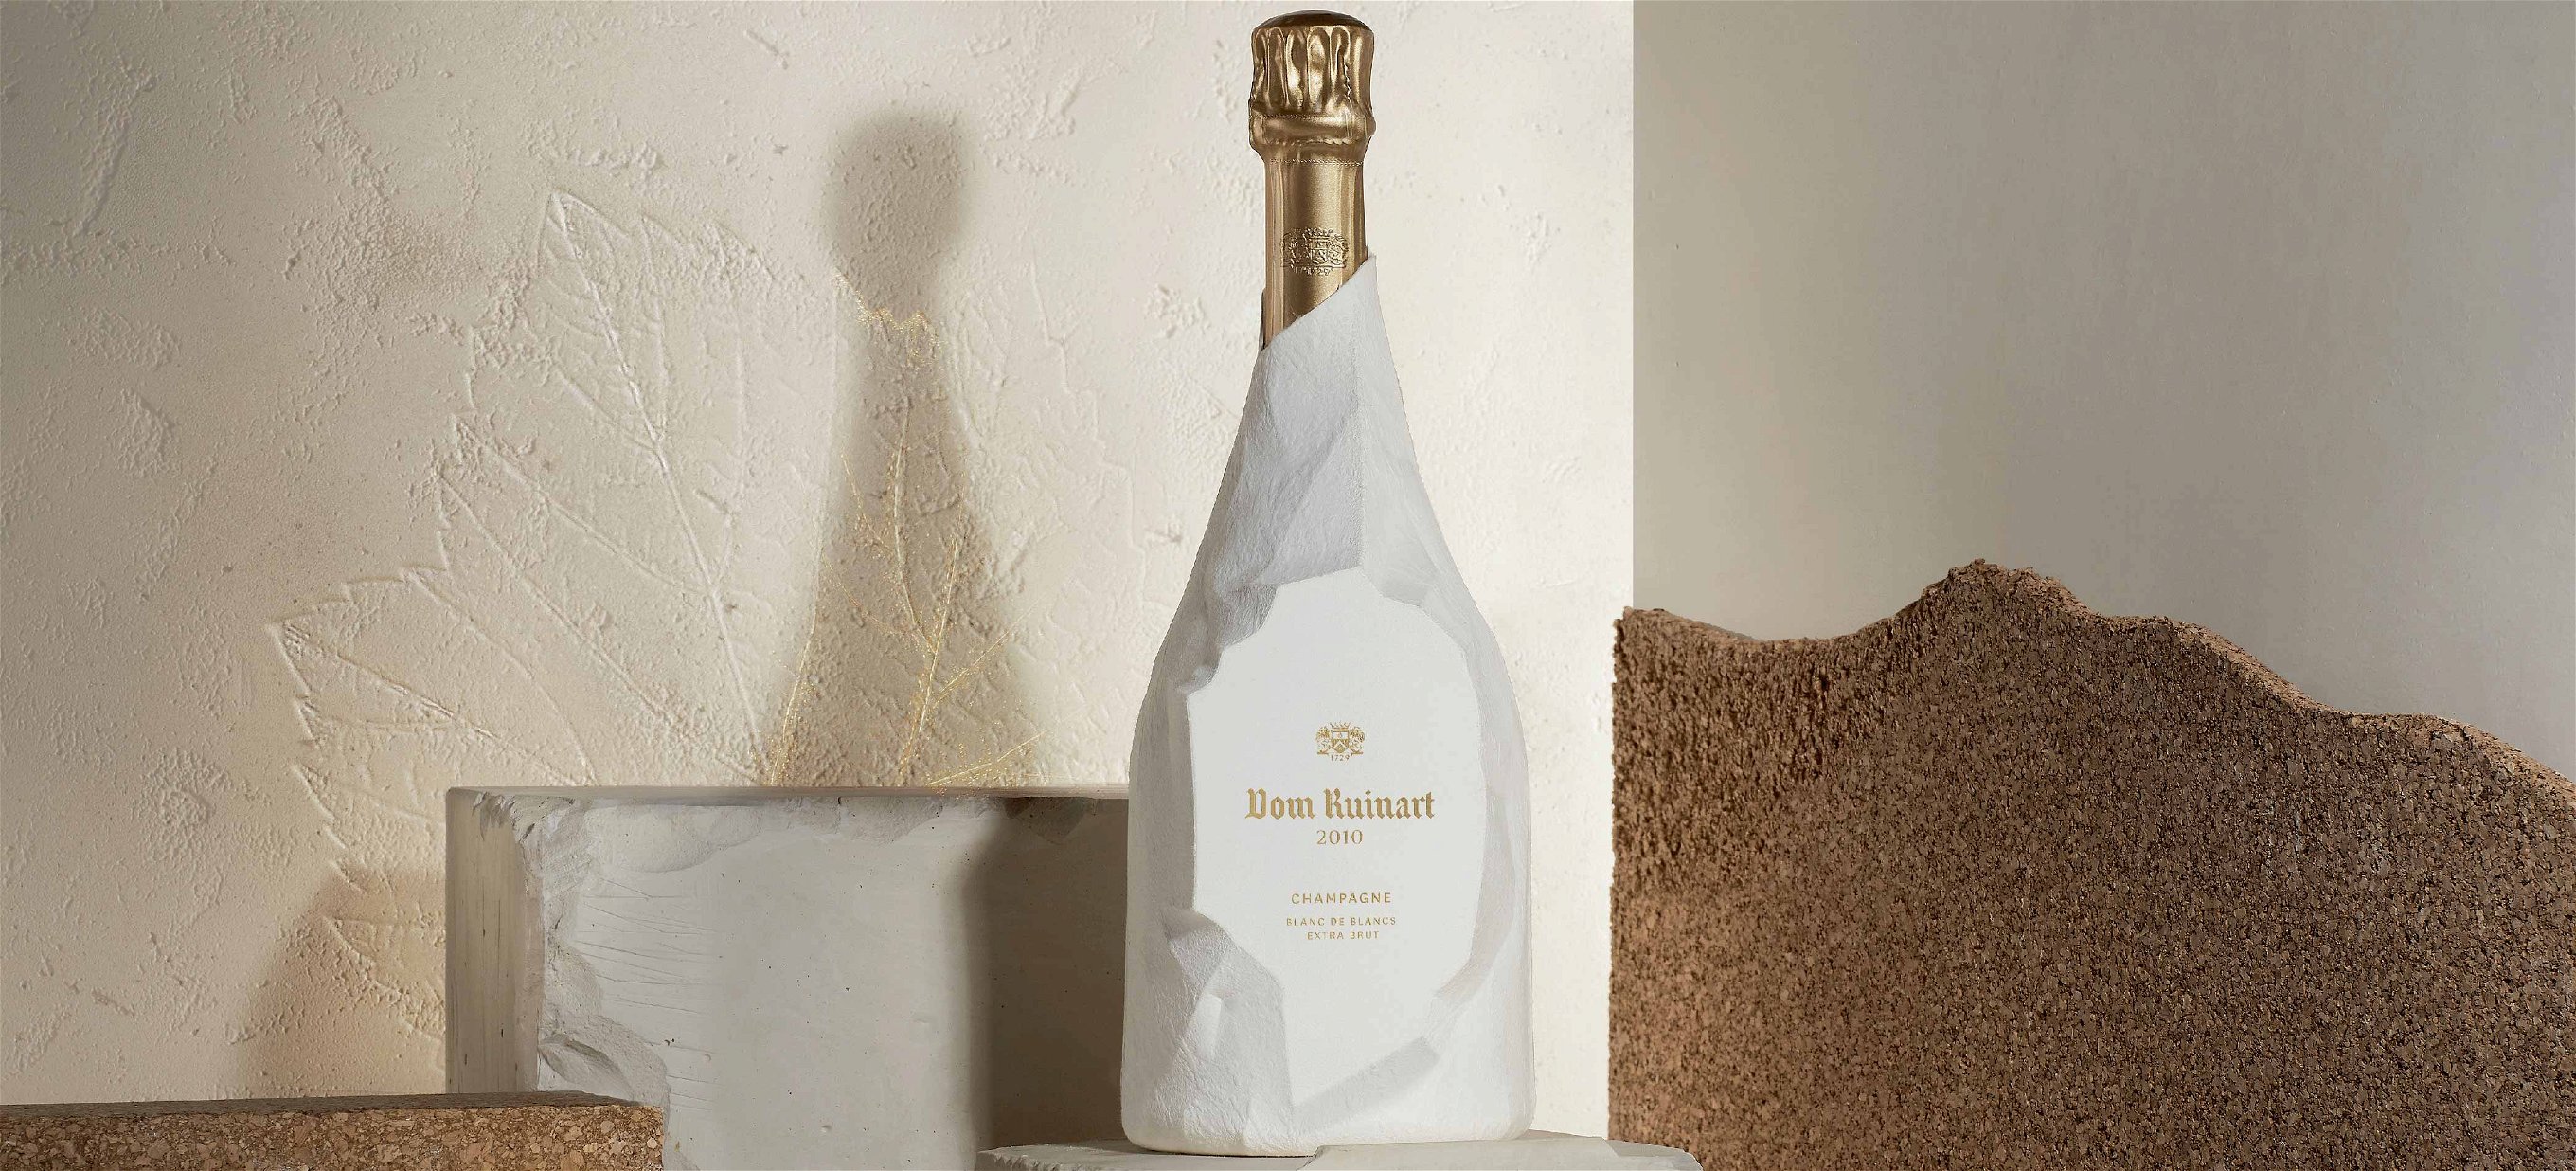 Buy Dom Ruinart Blanc de Blancs Champagne 2010